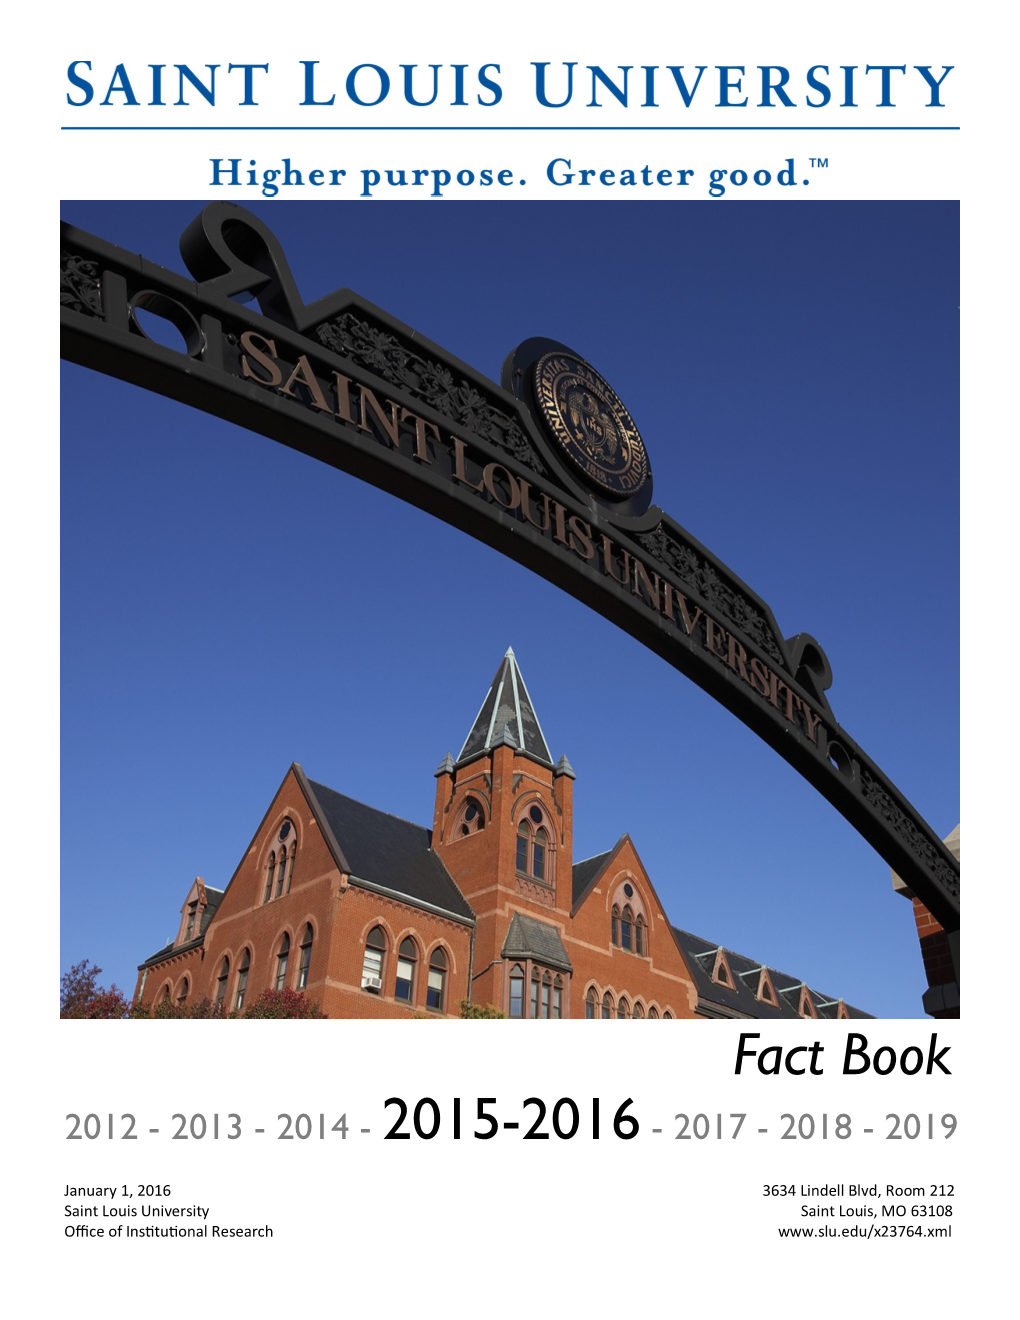 Saint Louis University Fact Book 2015-2016